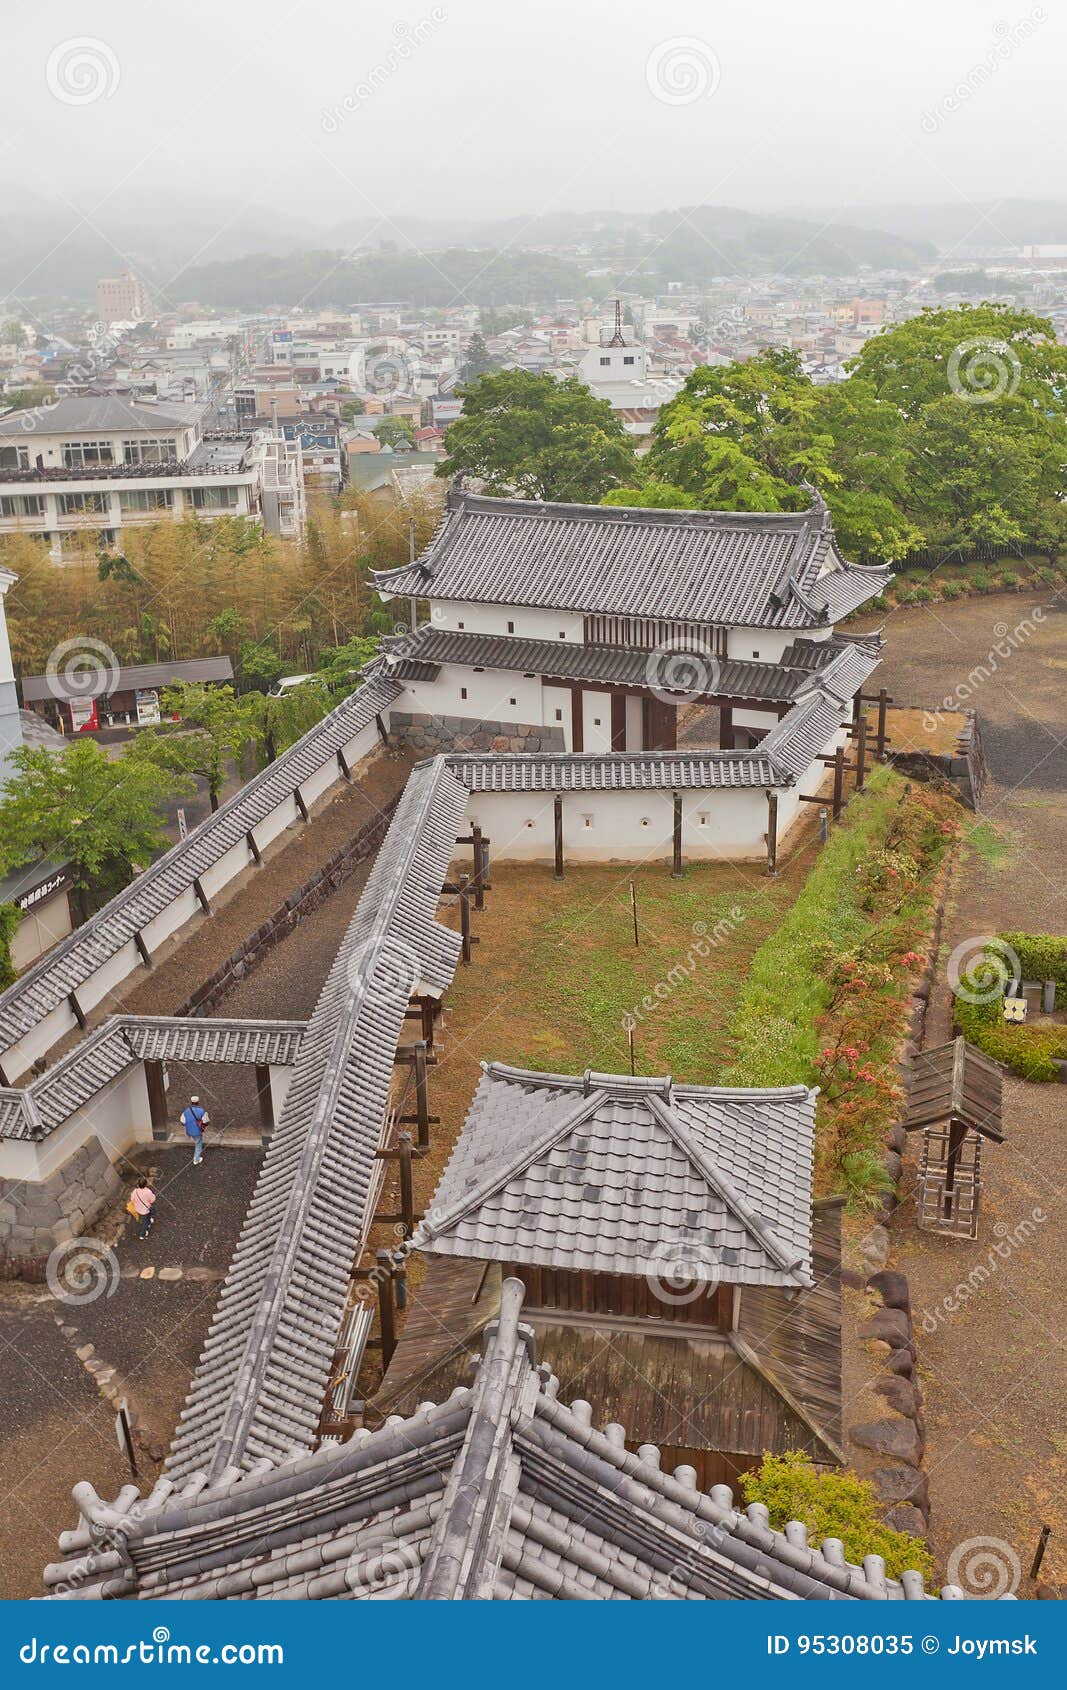 main gate and walls of shiroishi castle, japan